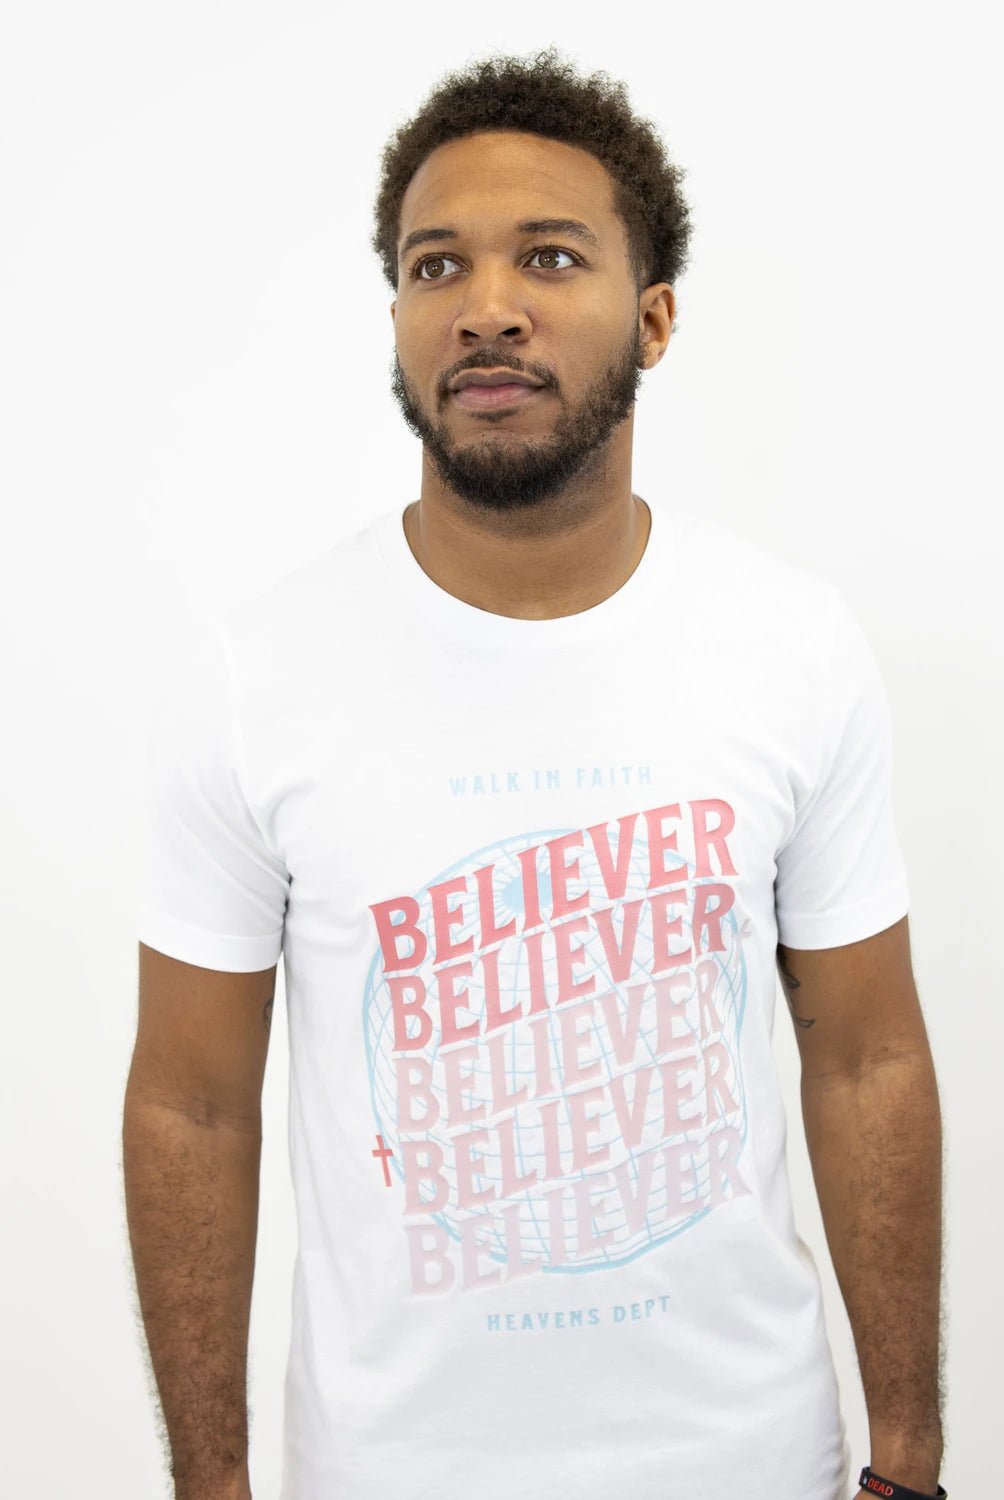 White Believer Unisex T-Shirt - Walk In Faith Clothing